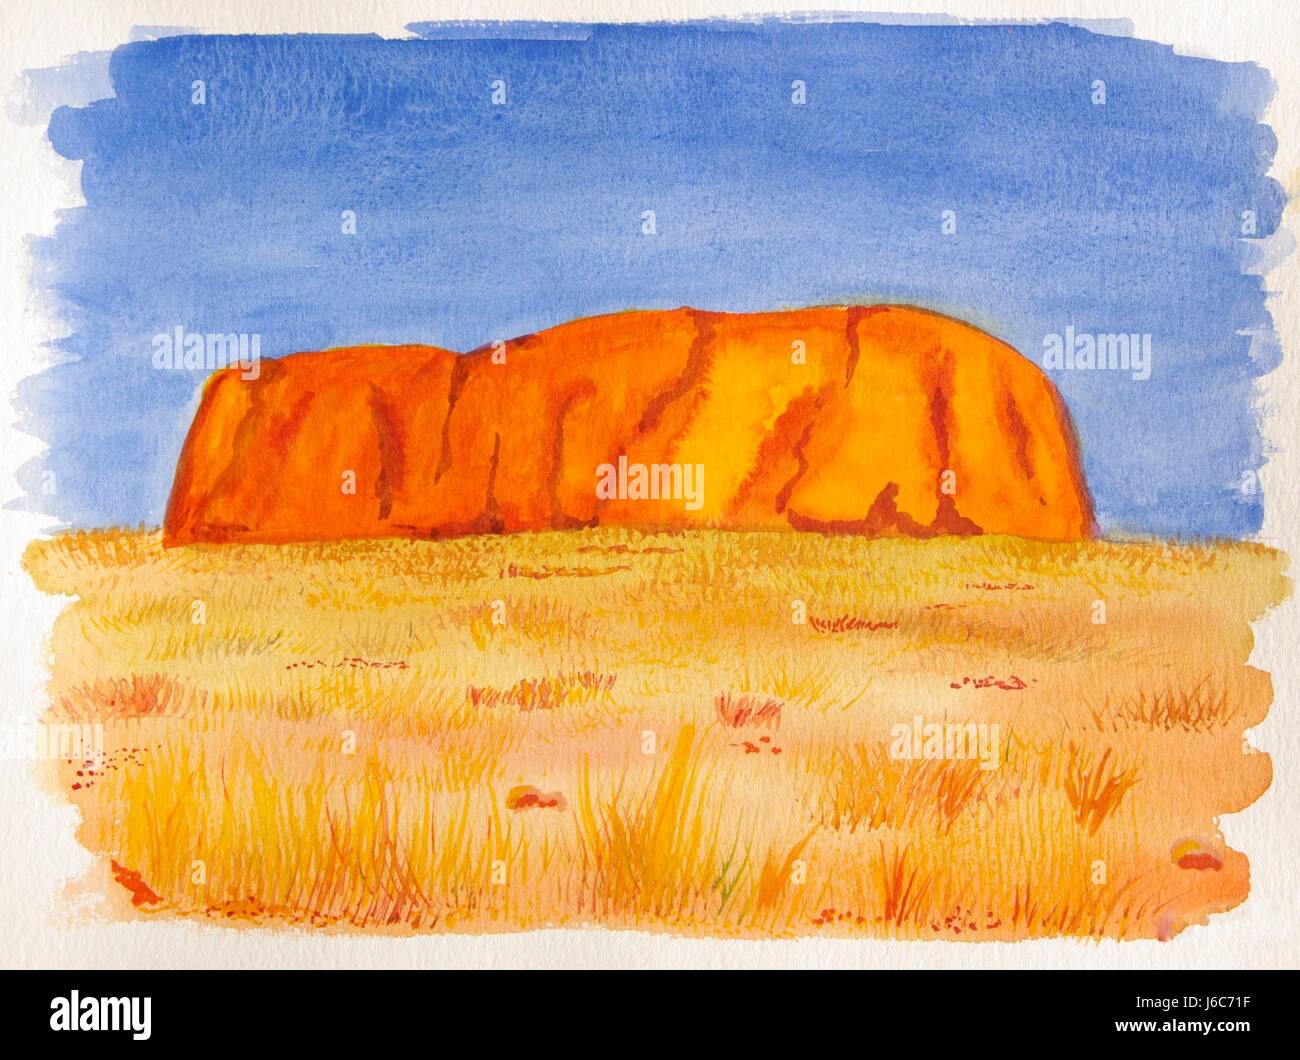 painting rock australia painted watercolour orange pictogram symbol pictograph Stock Photo